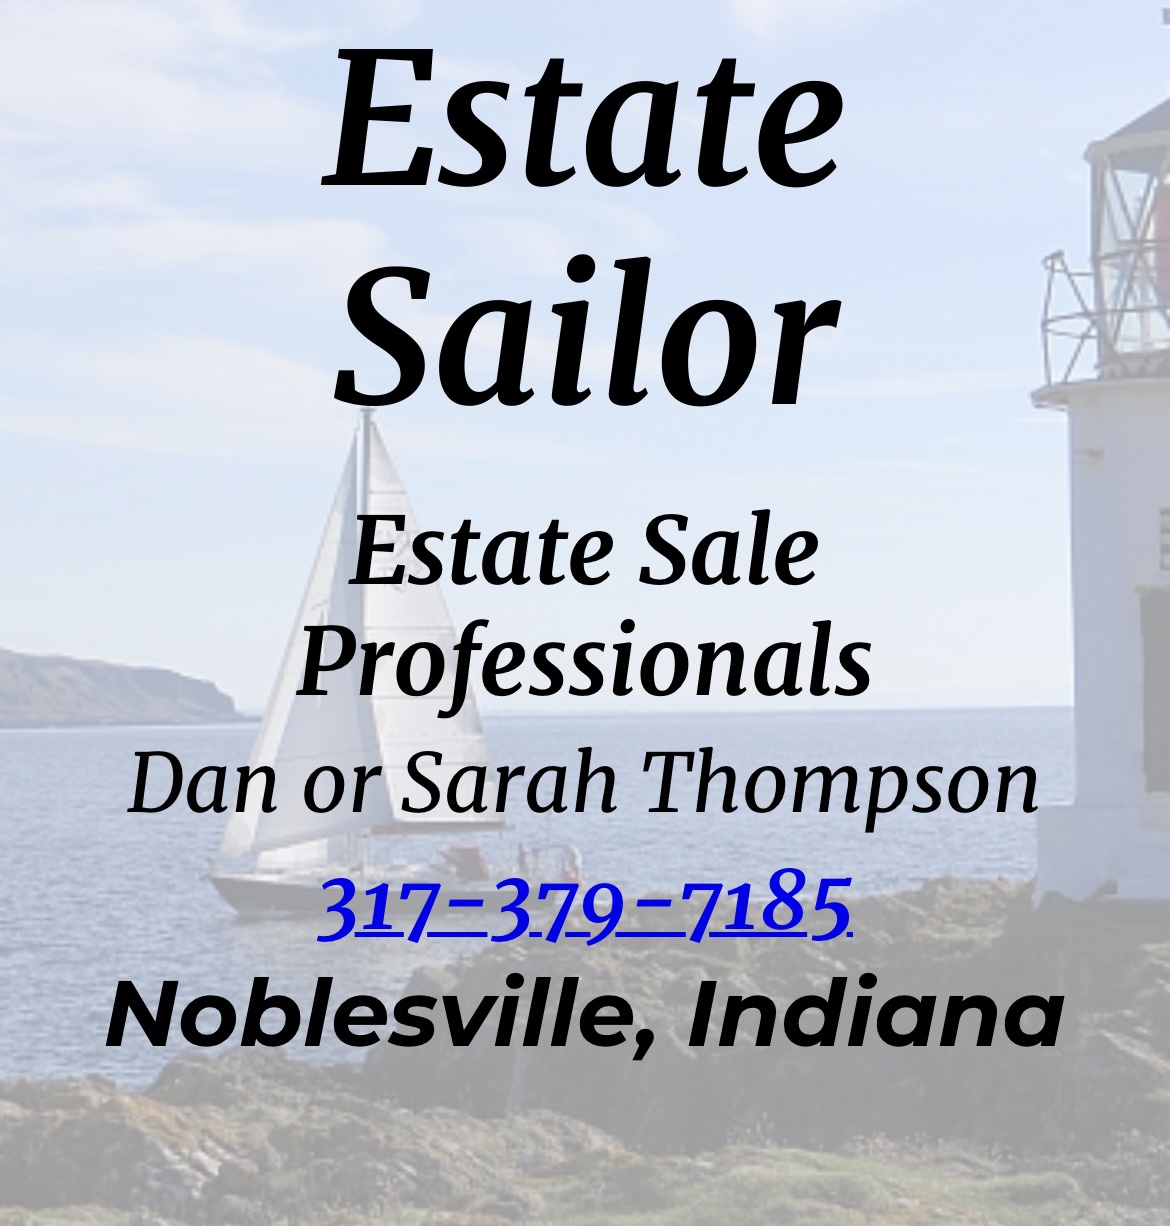 Estate Sailor LLC | AuctionNinja